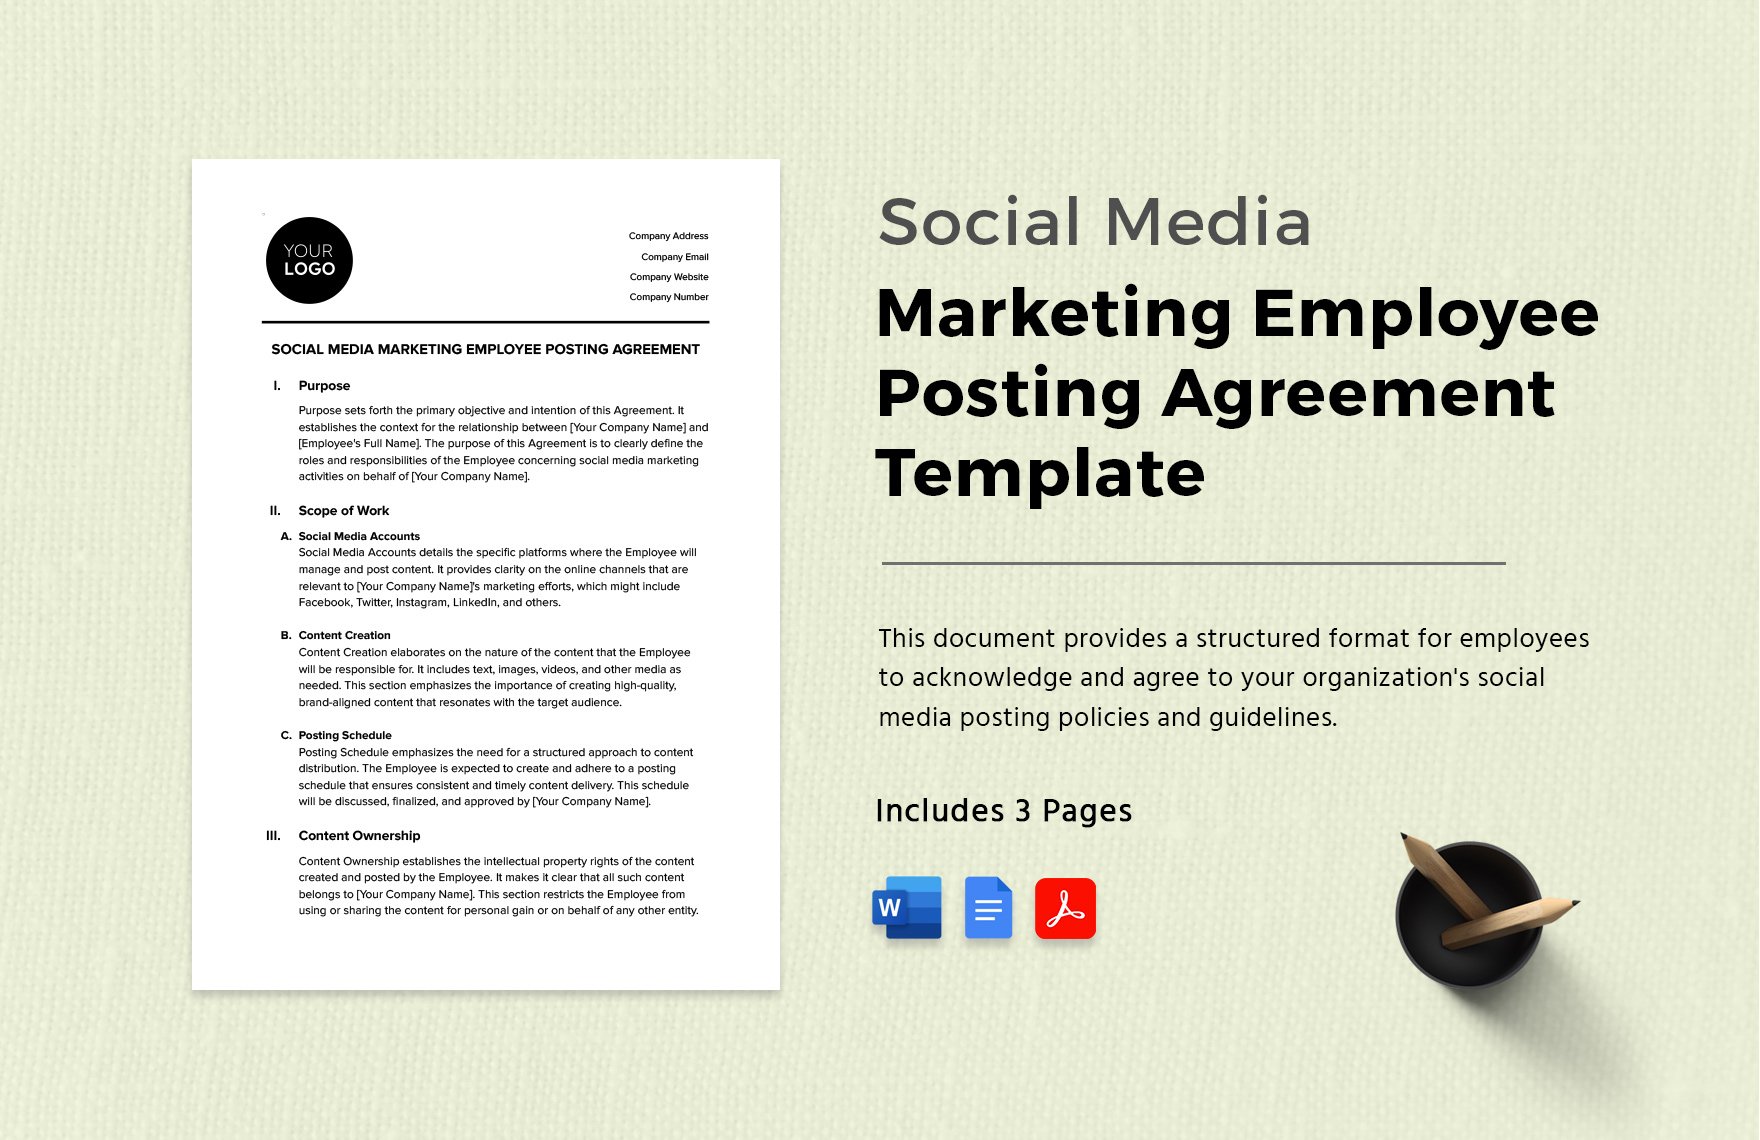 Social Media Marketing Employee Posting Agreement Template